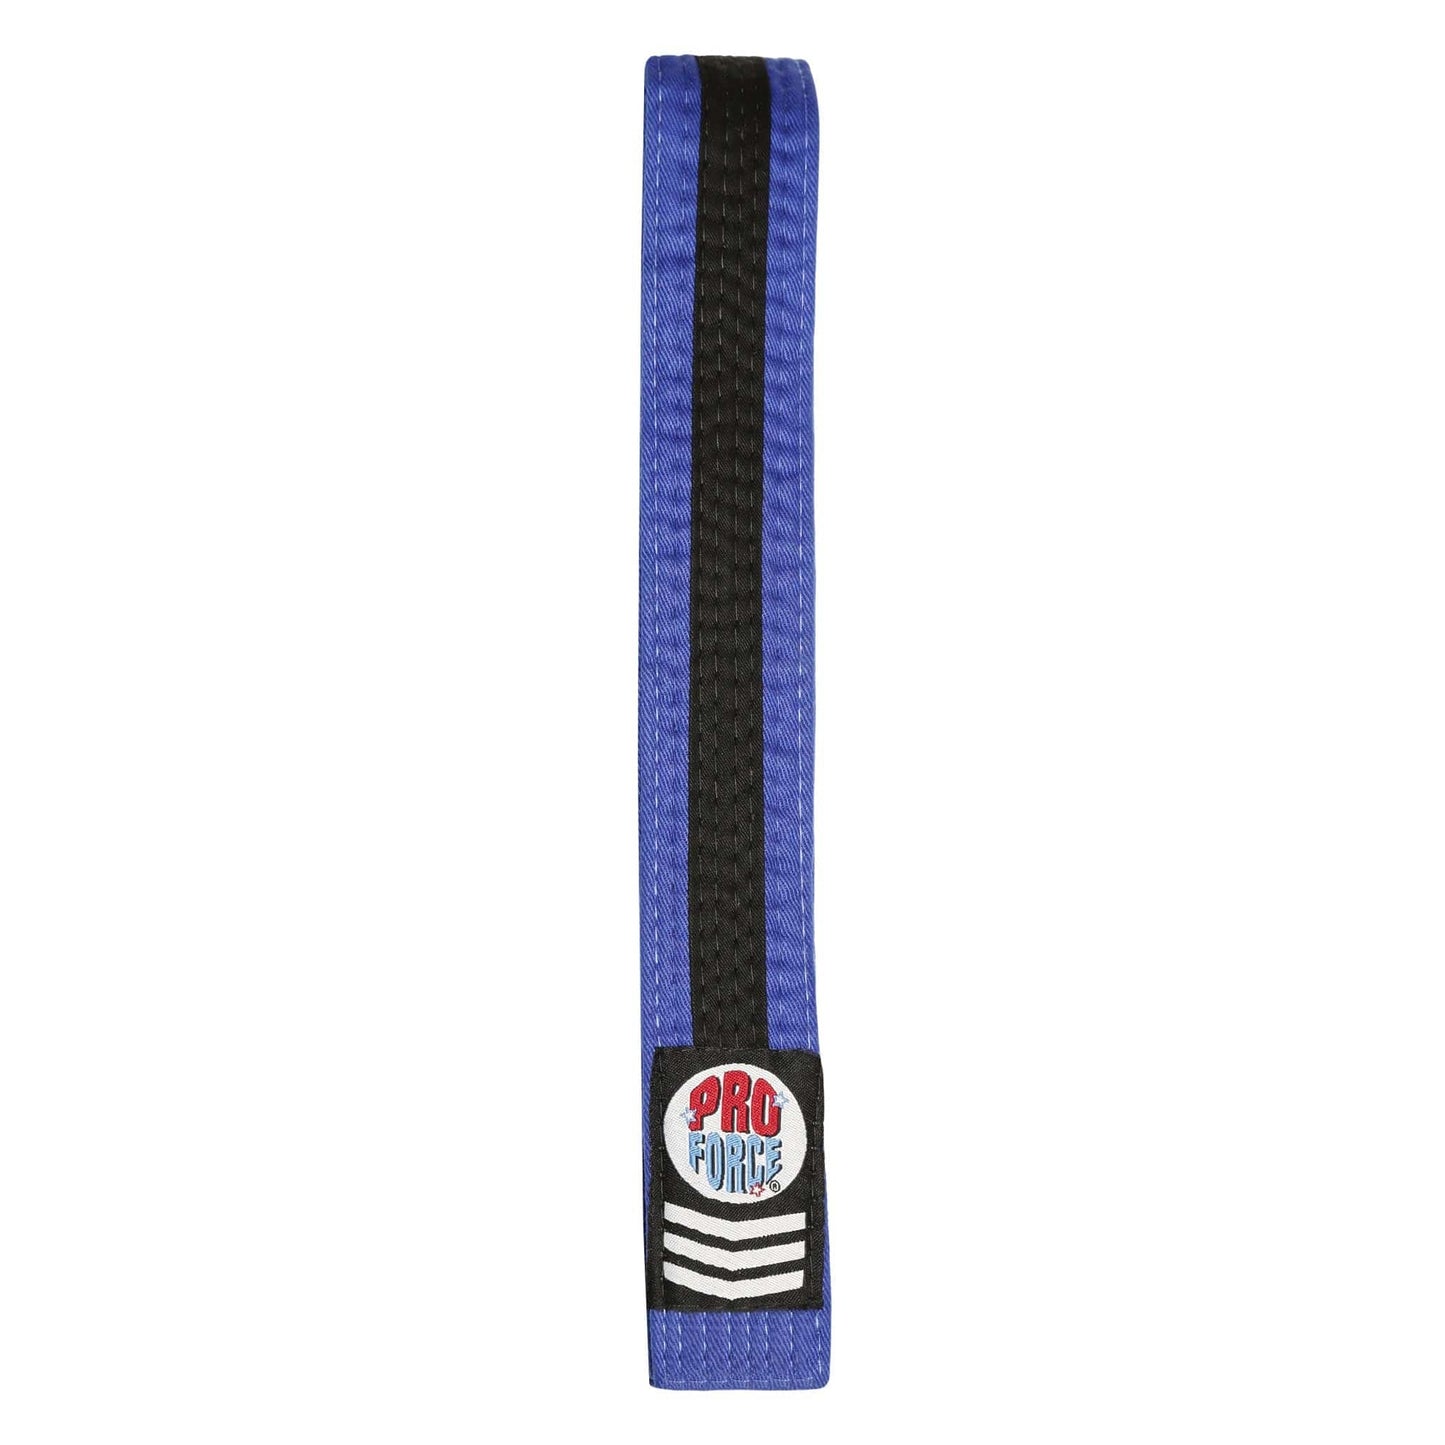 ProForce sporting goods ProForce II 1.5 inch Double Wrap Black Stripe Karate Belt